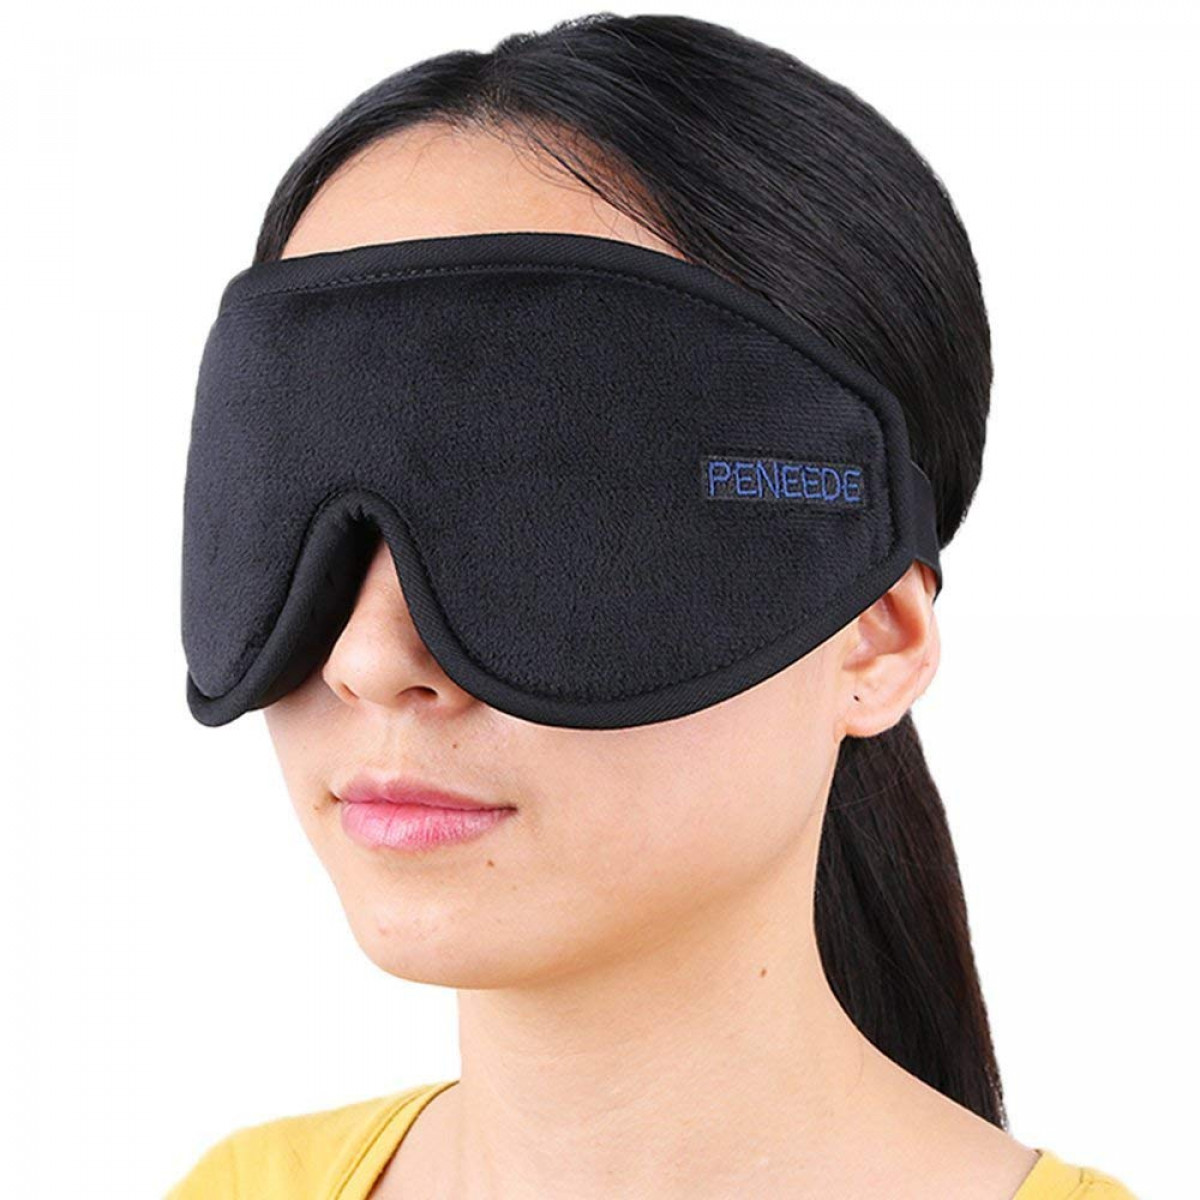 Sleep Mask Block Out Light 100%, Eye Mask Sleeping of 3D Contoured Blackout  Night Blindfold, Relaxation Soft Cushion Travel Eye Cover